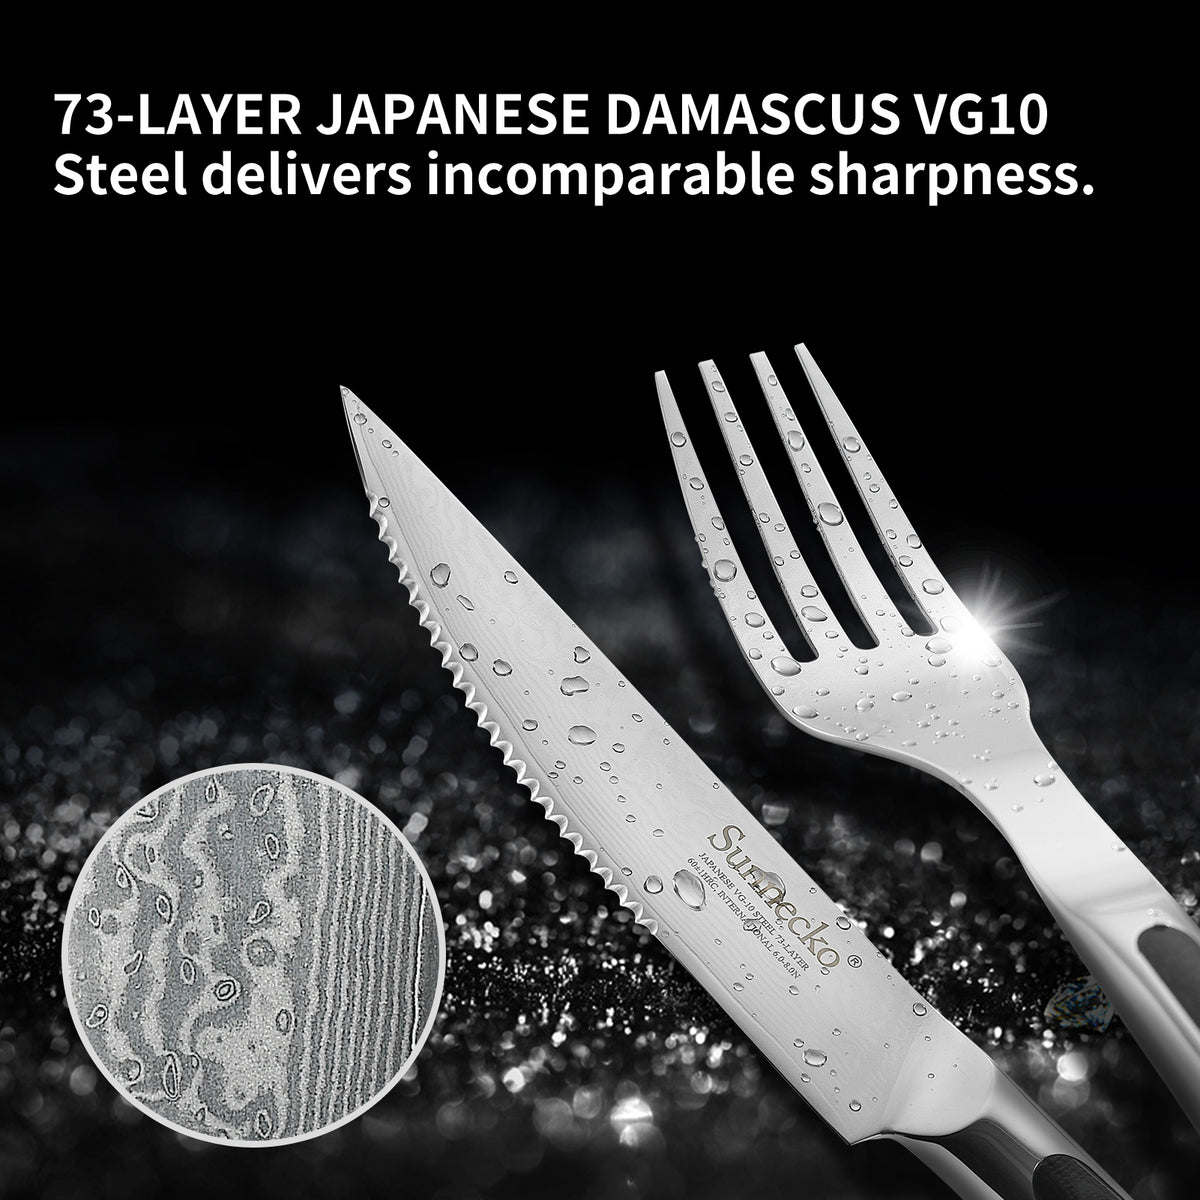 4Pcs Damascus Steak Knife Set - Minimal